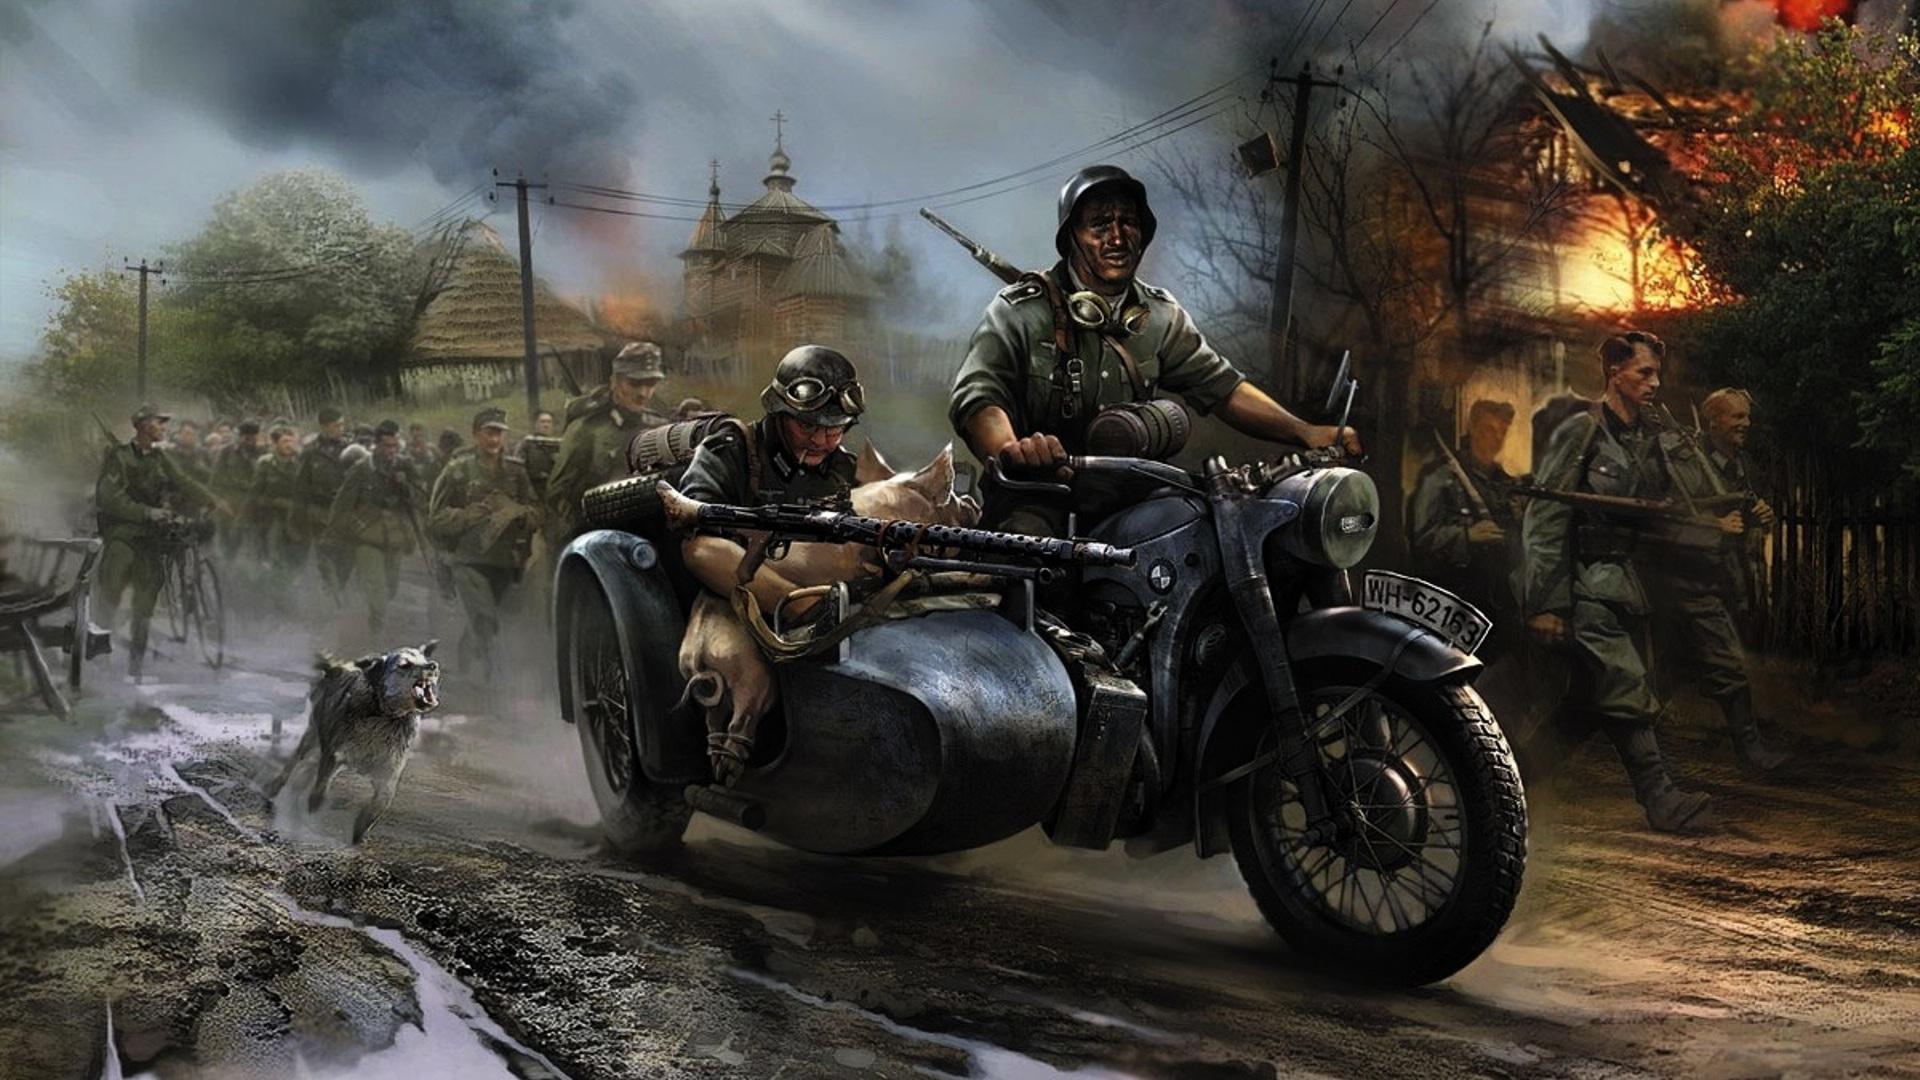 Artwork Military Motorcycles